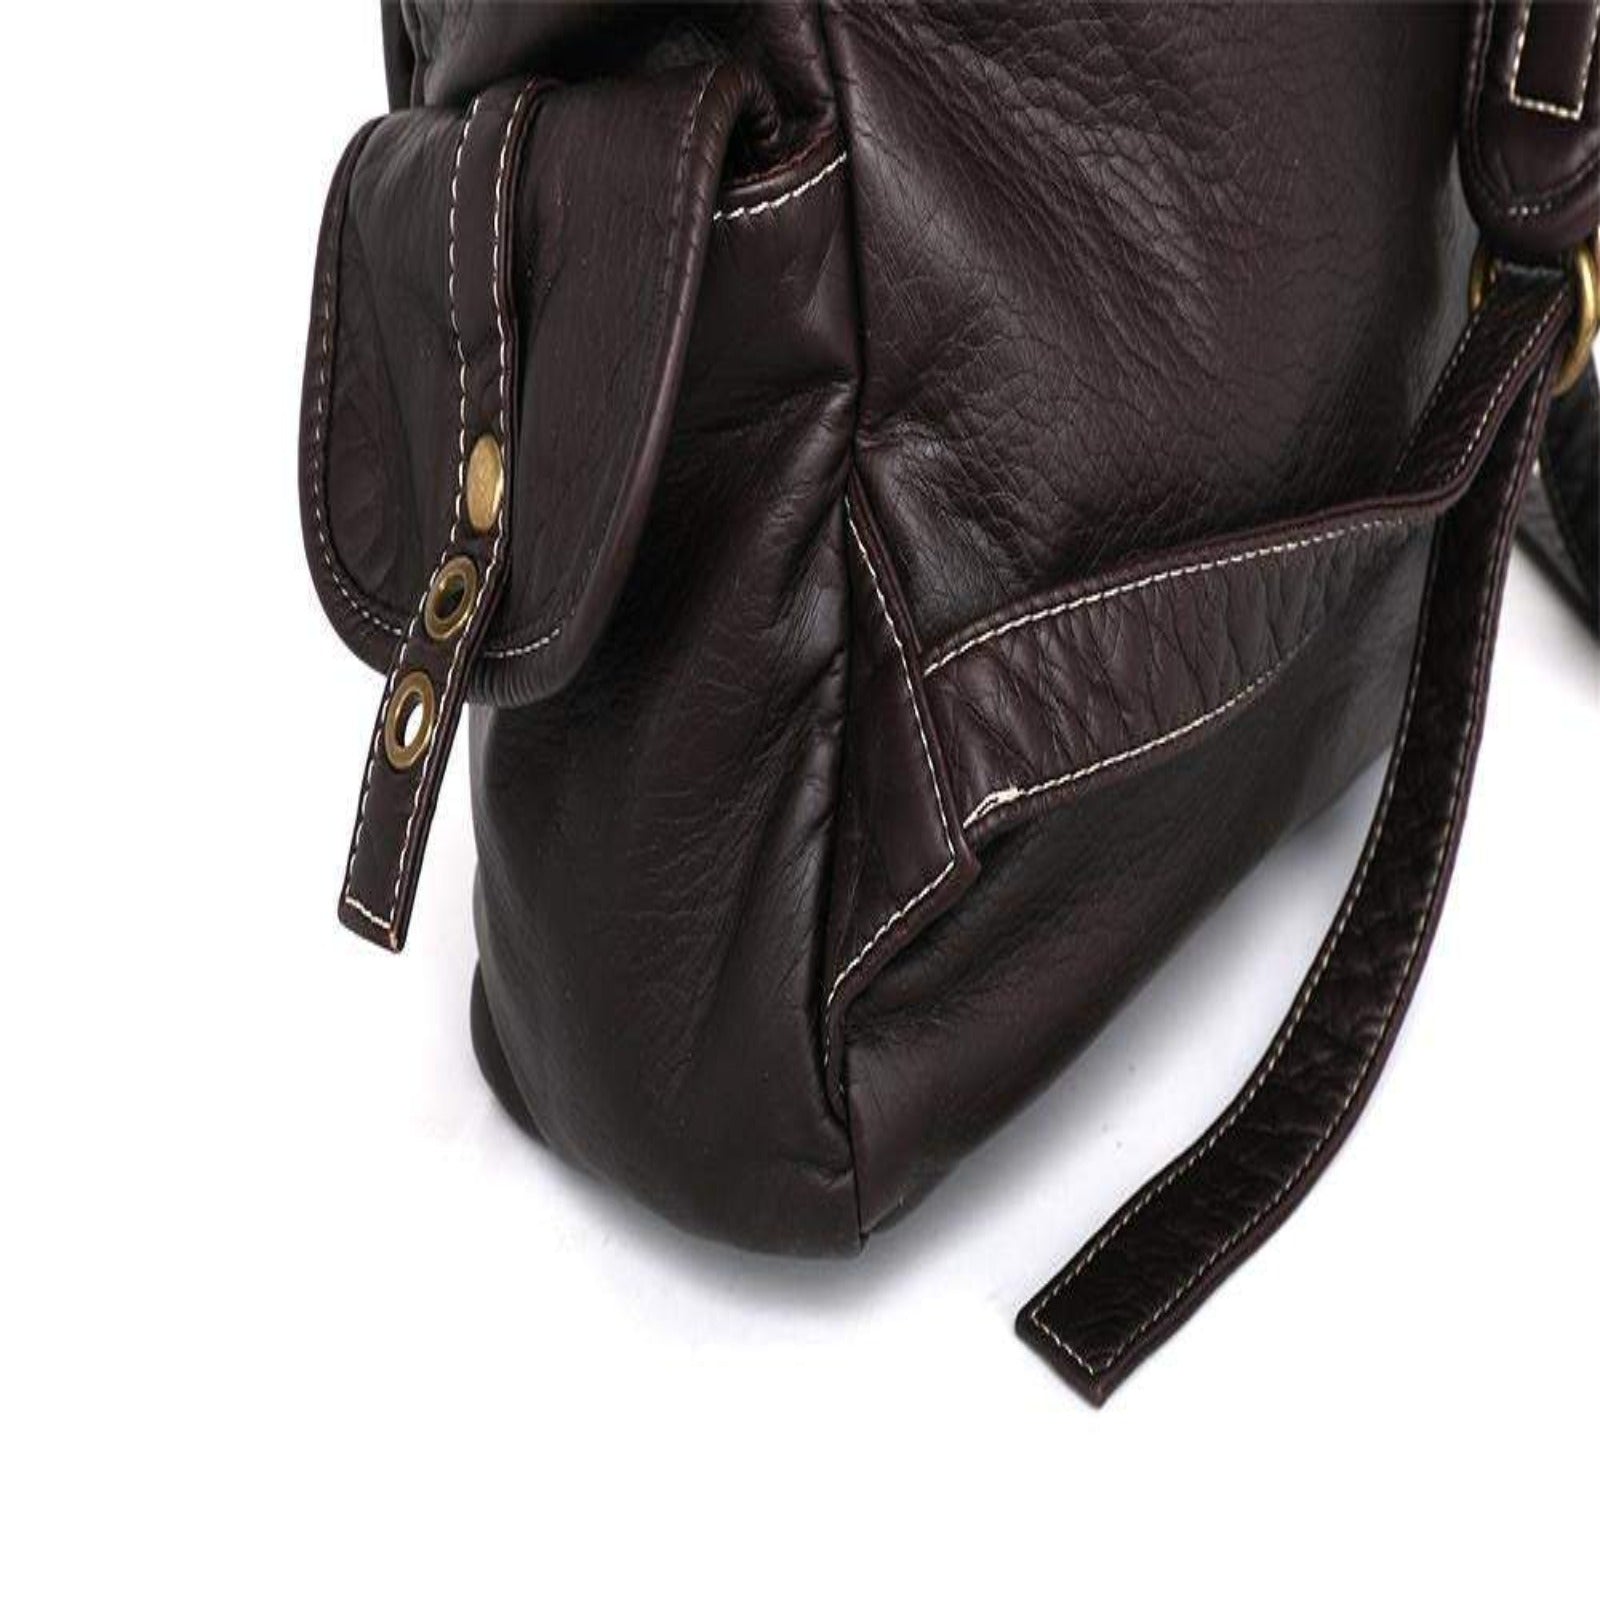 Wrangler Backpack for Women - Cowgirl Wear